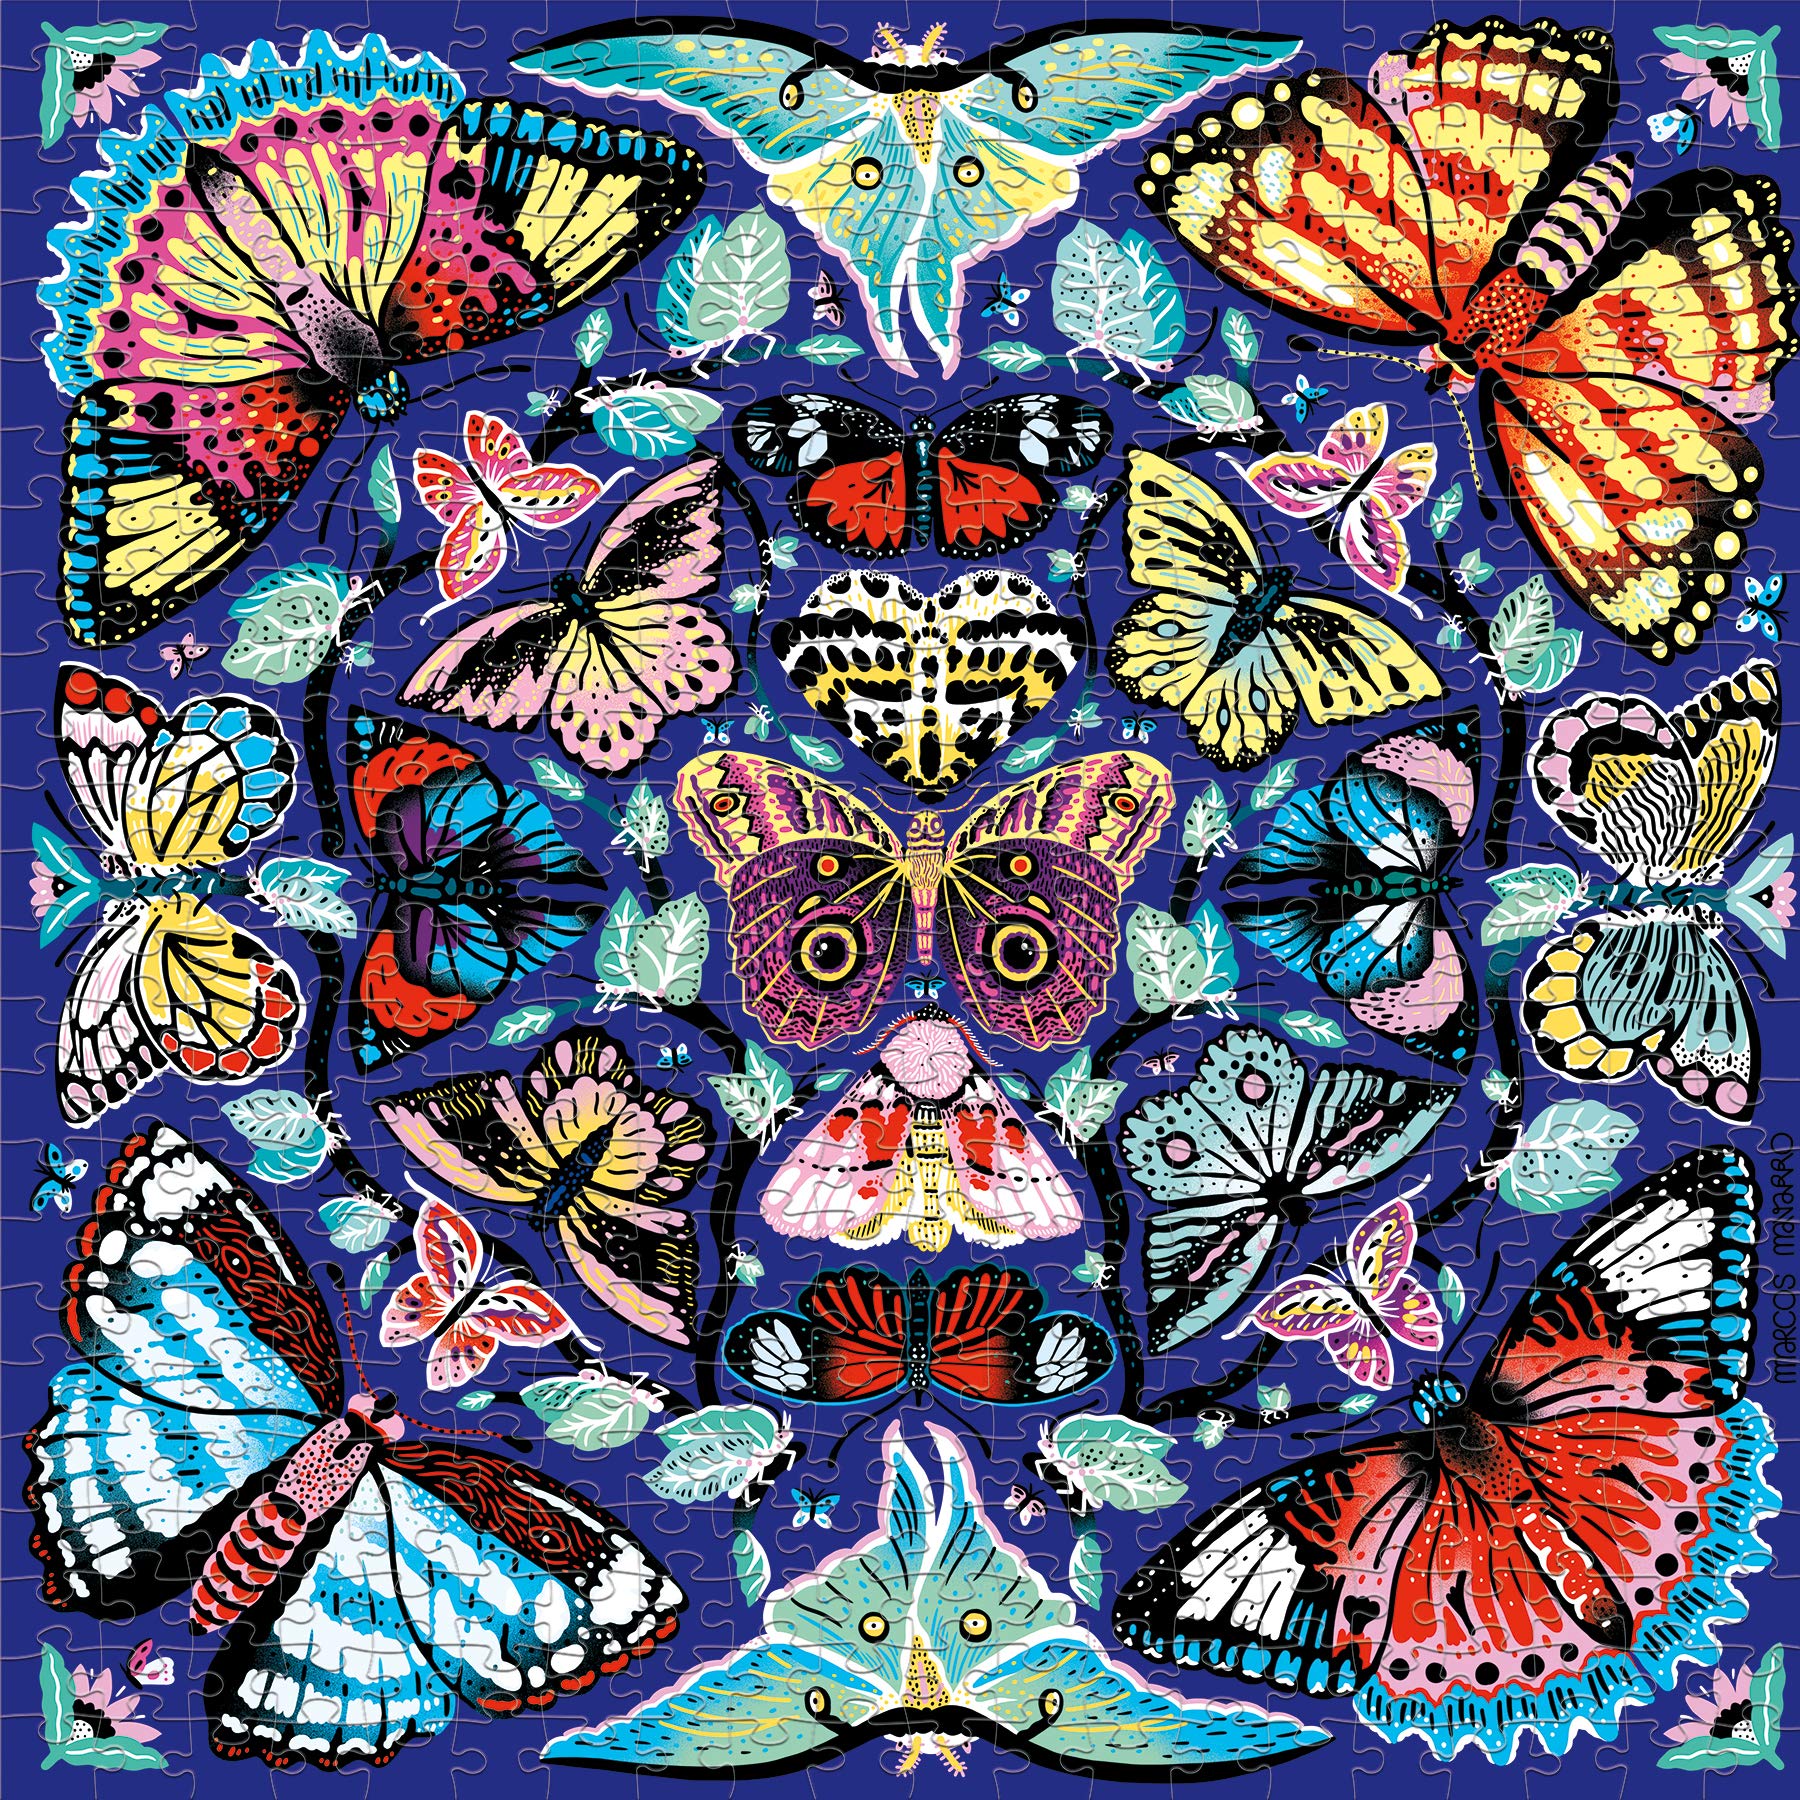 Mudpuppy - Puzzle - Kaleido Butterflies - 500 Piece